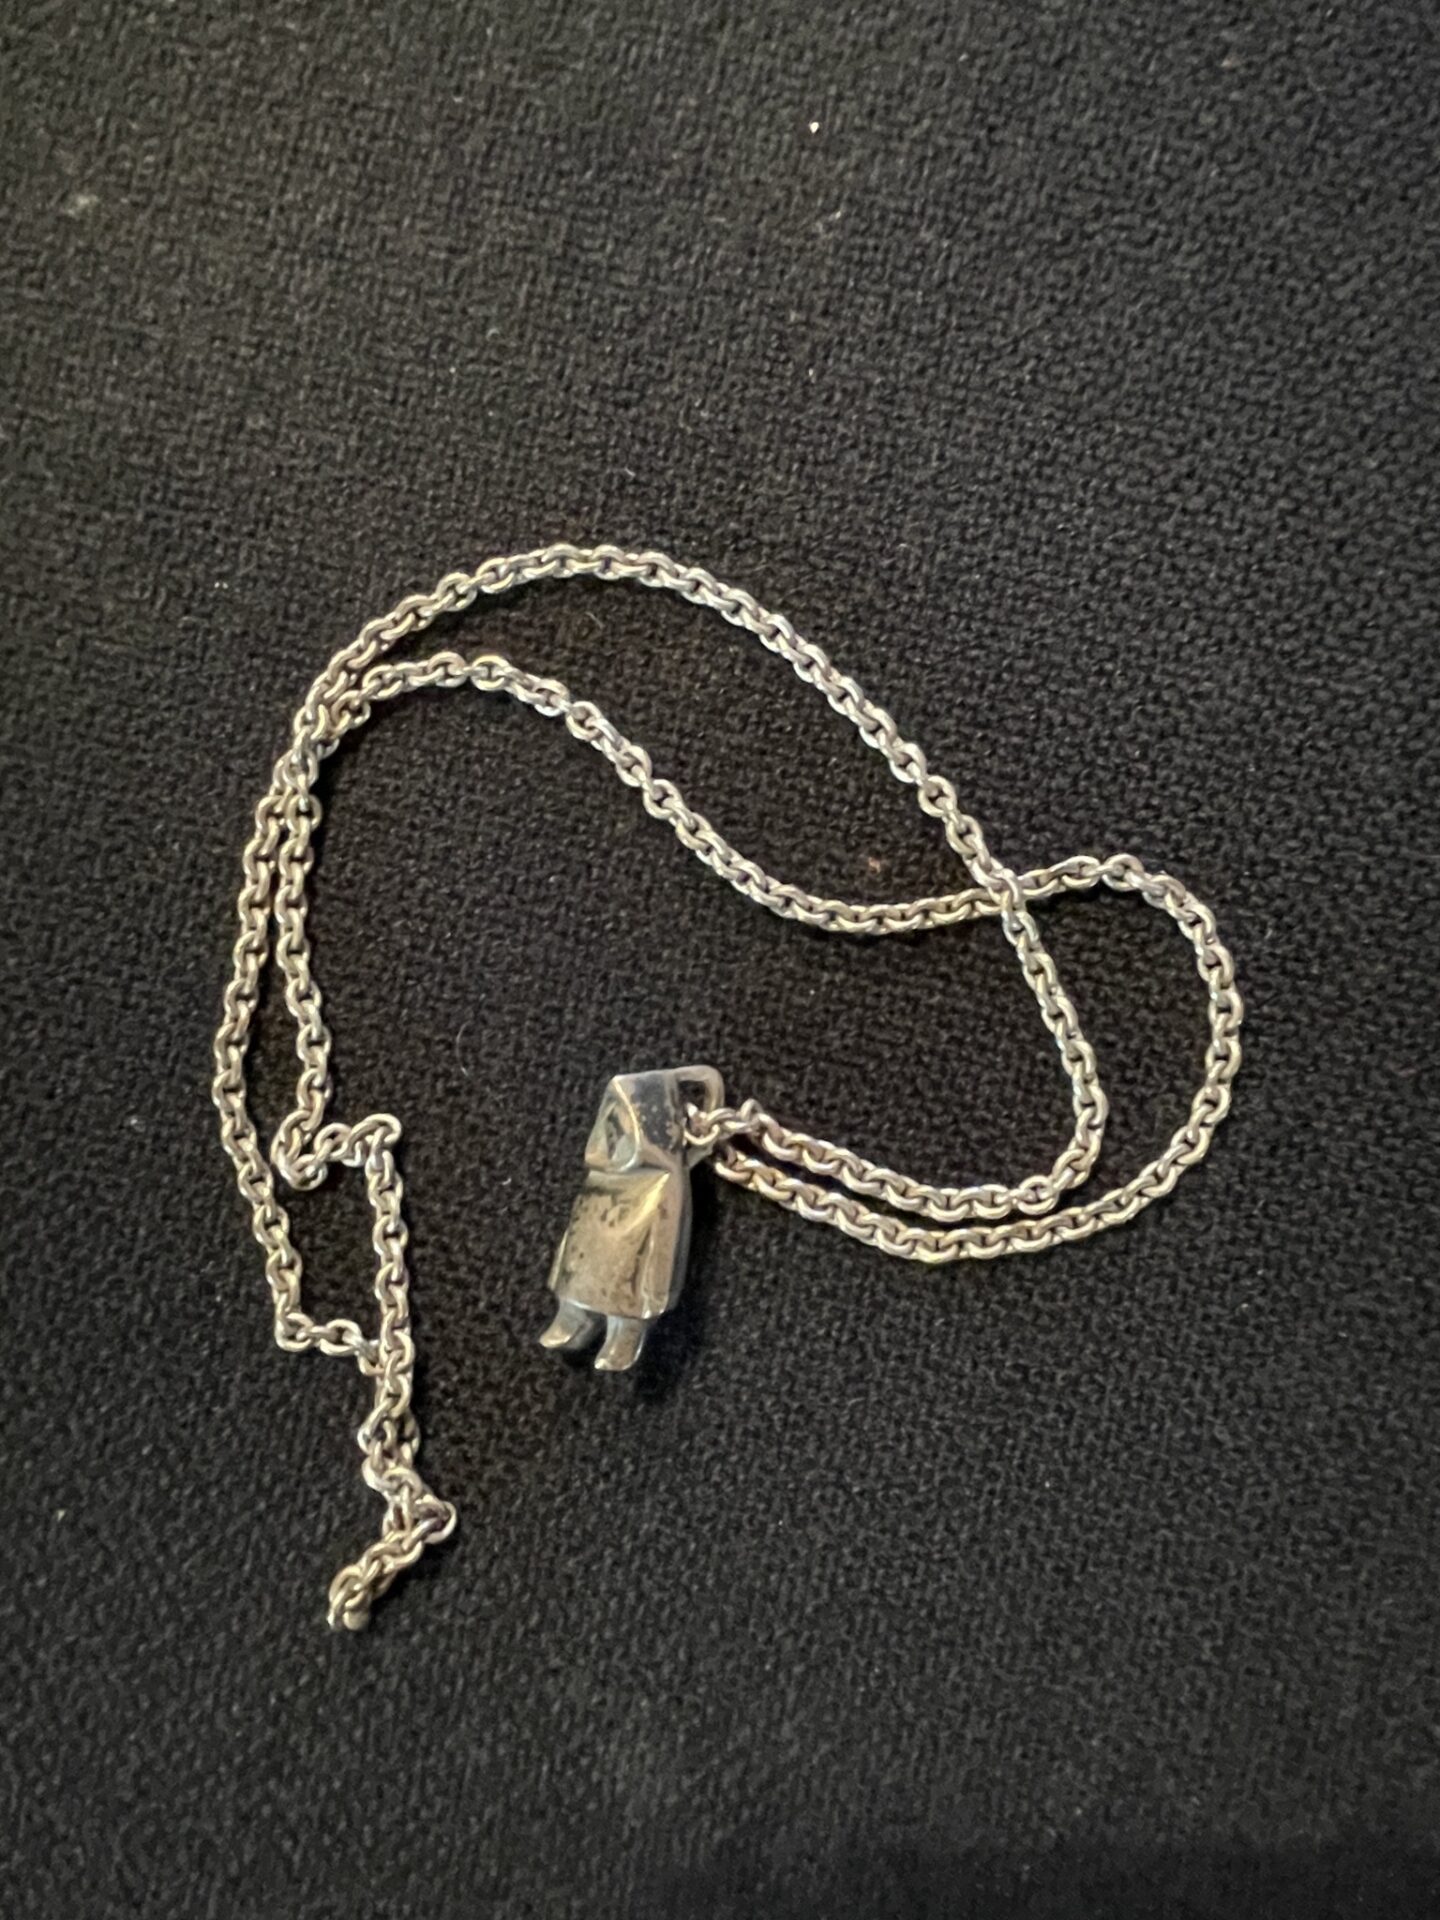 Thulemanden, (3,5cm), med kæde (60 cm), Sterling sølv. Pris 800kr 